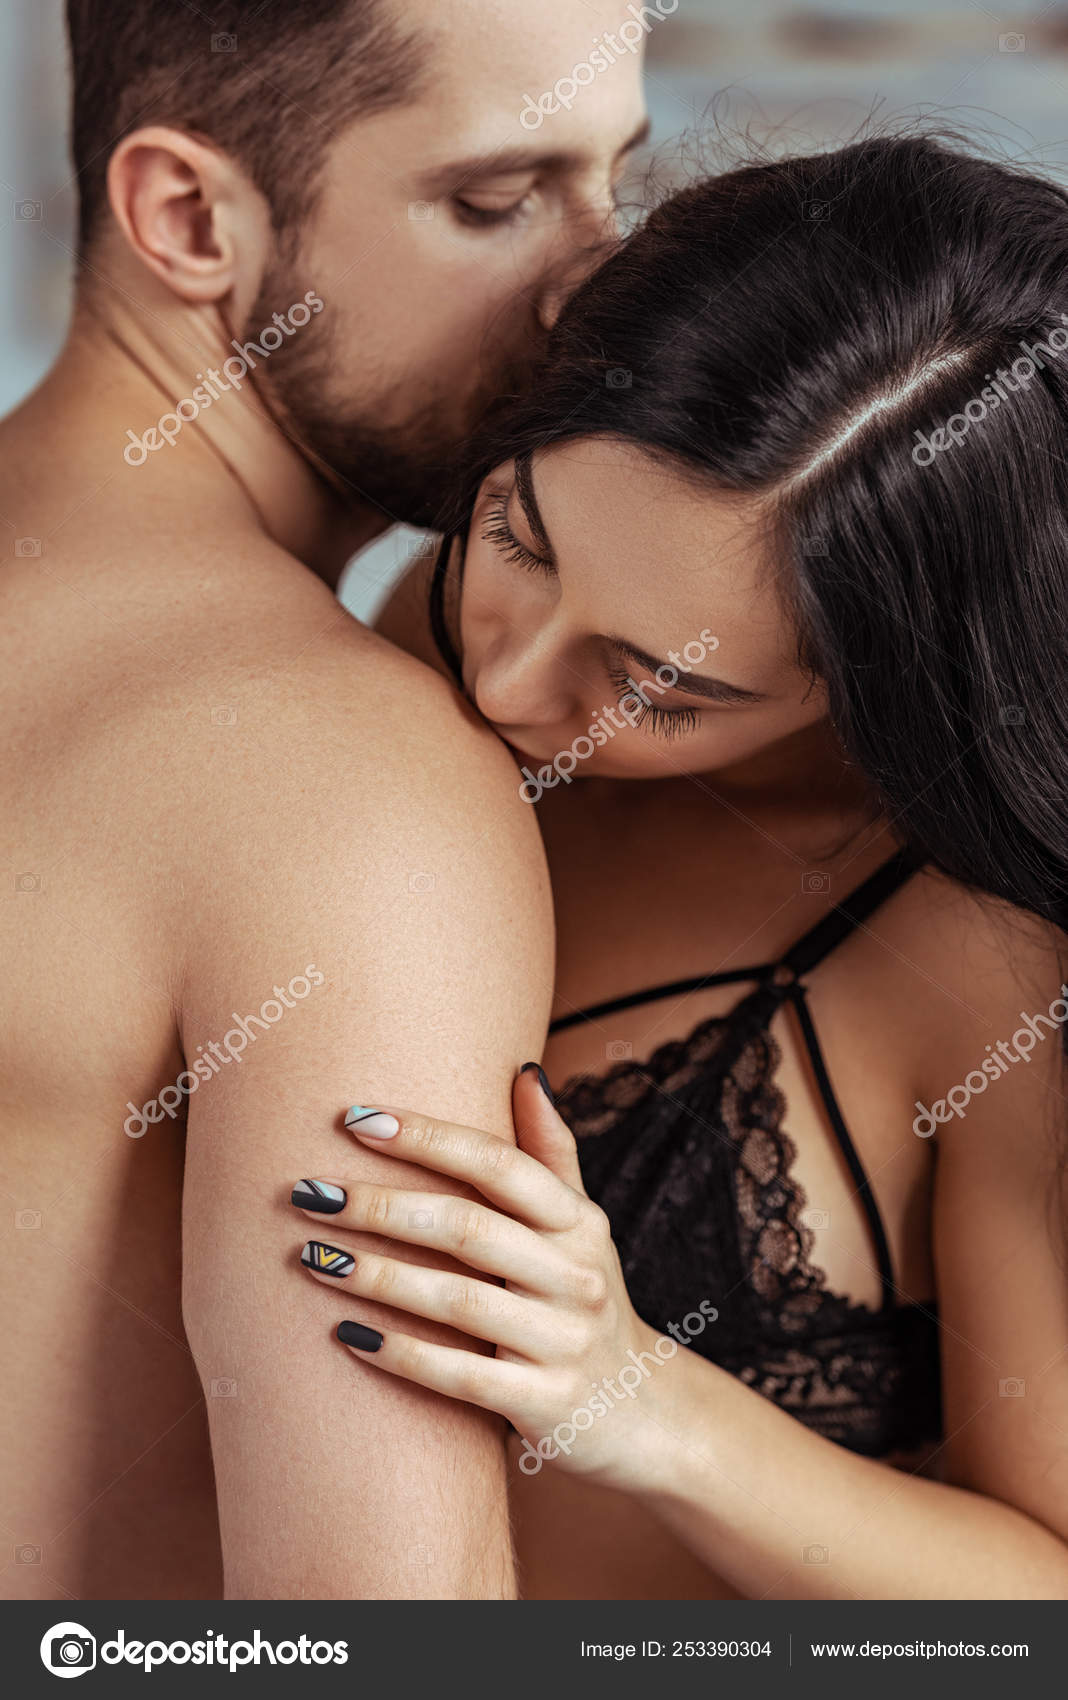 Sexy Girls Wearing Bras Kissing A Boy